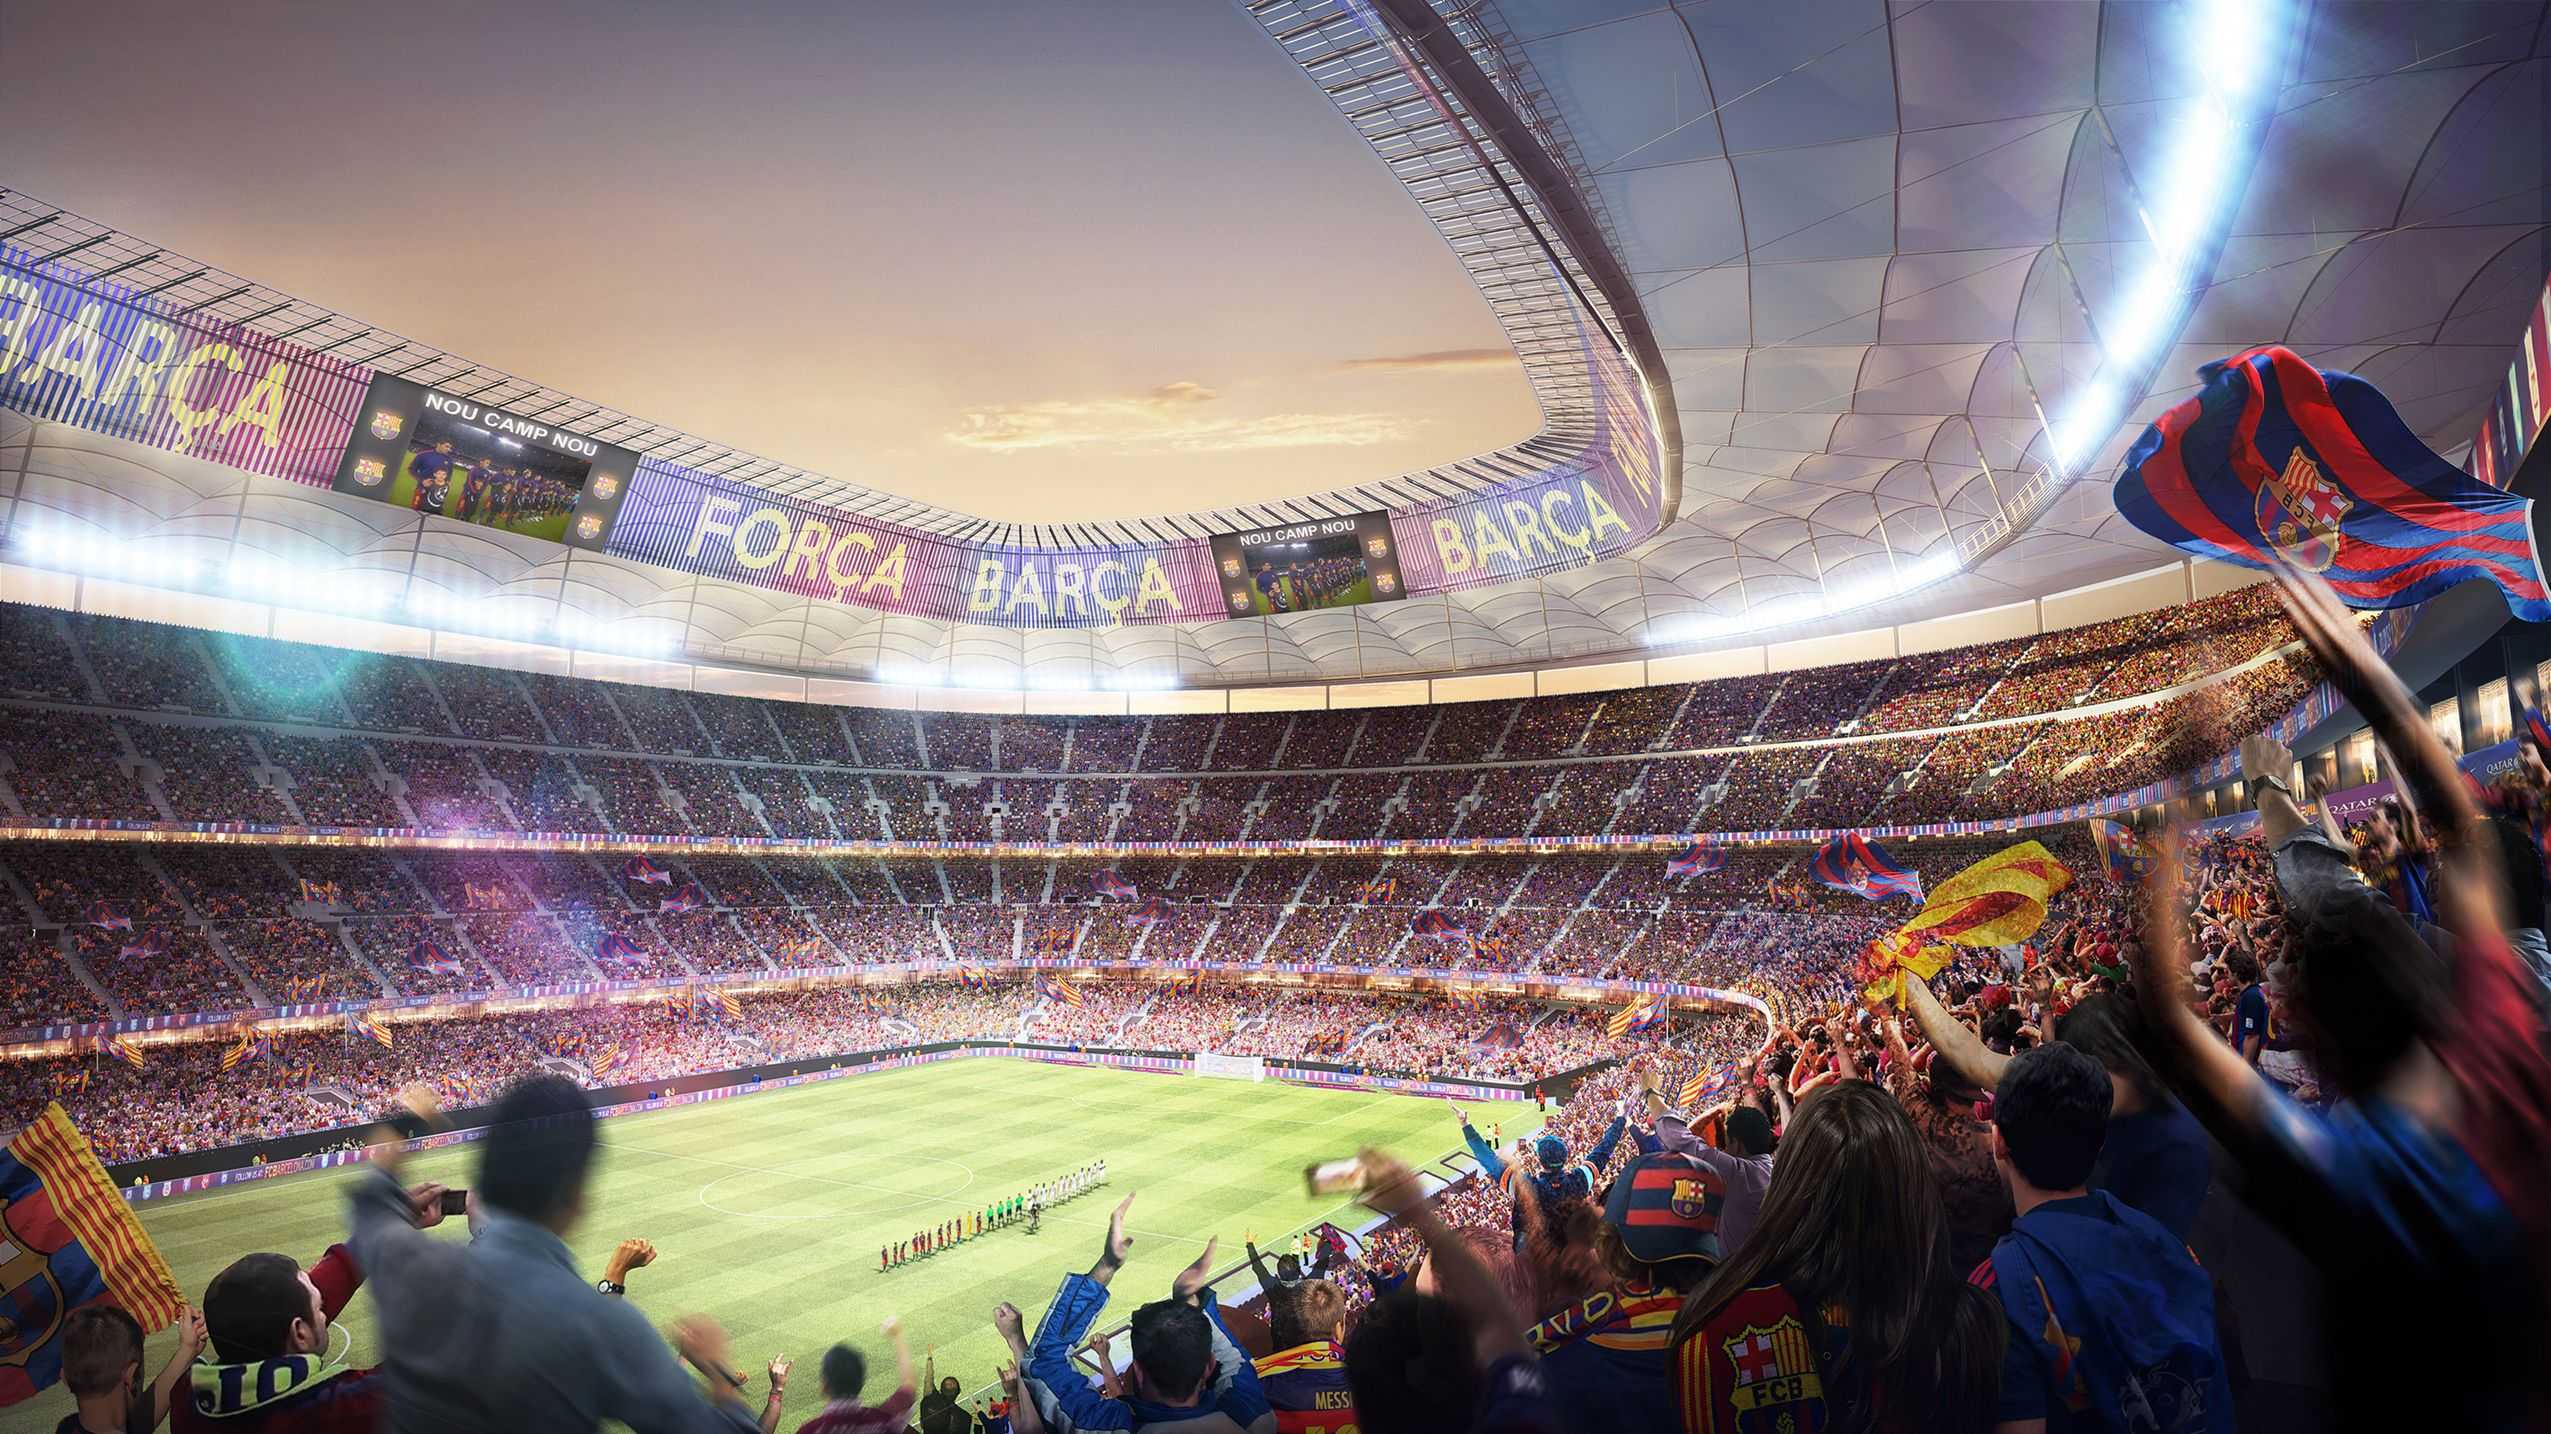 Камп нов. Стадион Камп ноу в Барселоне. ФК Барселона стадион Камп ноу. ФК Барселона стадион Камп ноу реконструкция. Стадион Барселона 2022.